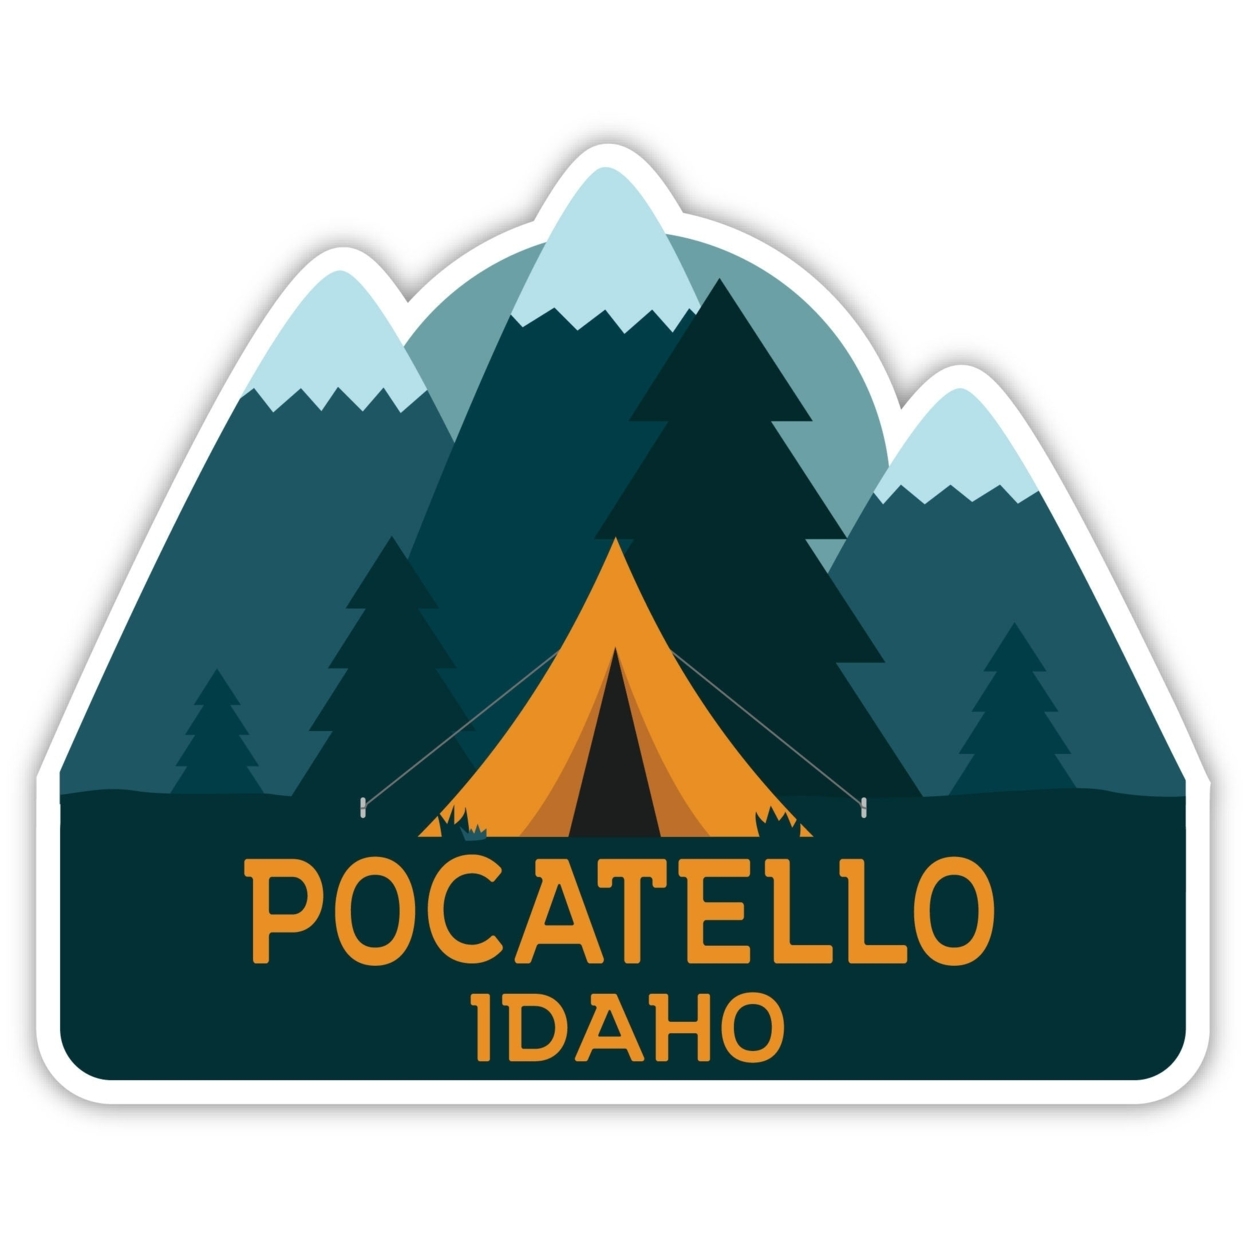 Pocatello Idaho Souvenir Decorative Stickers (Choose Theme And Size) - Single Unit, 4-Inch, Camp Life